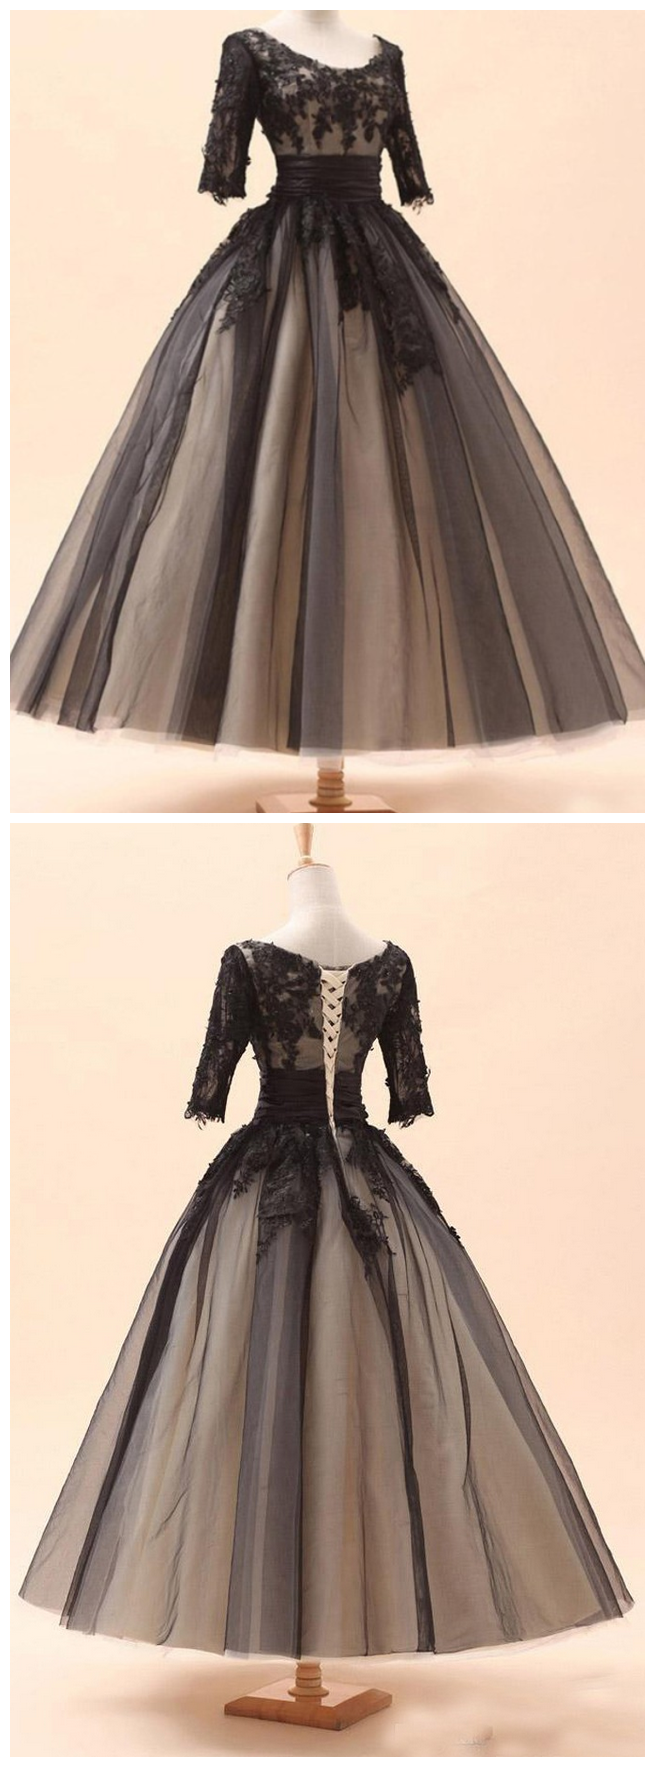 Ball Gown Evening Dresses, Tea Length Three Quarter Vestido De Festa Formal Party Gowns